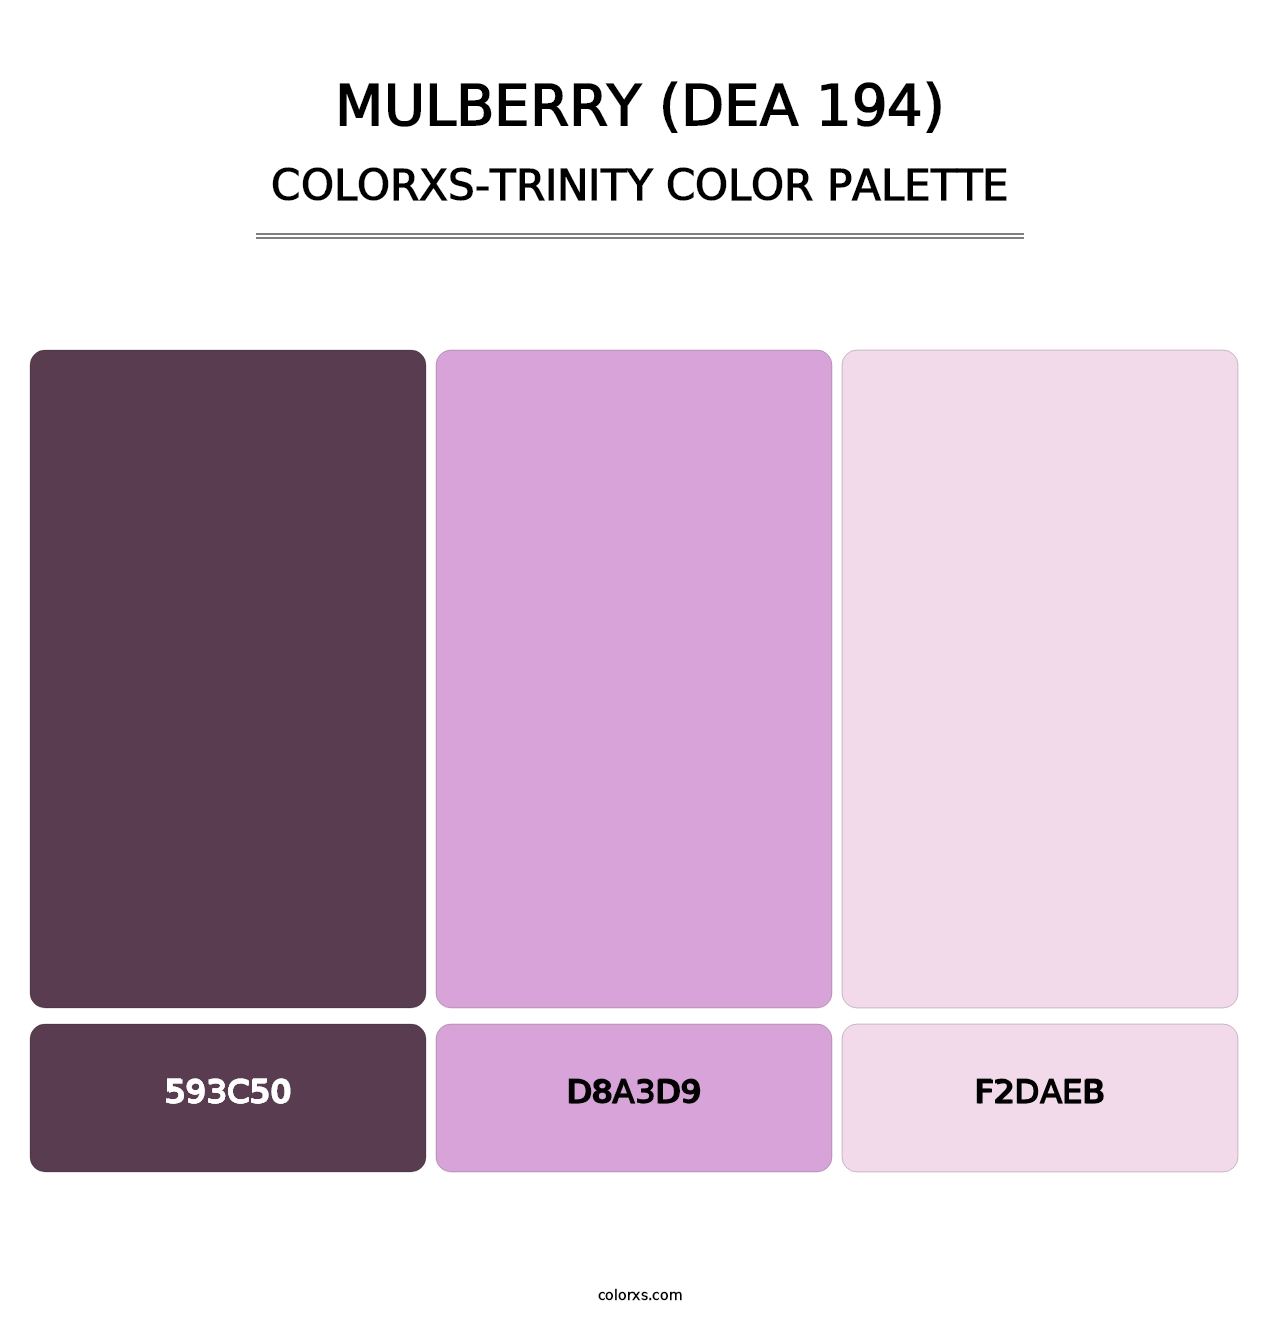 Mulberry (DEA 194) - Colorxs Trinity Palette